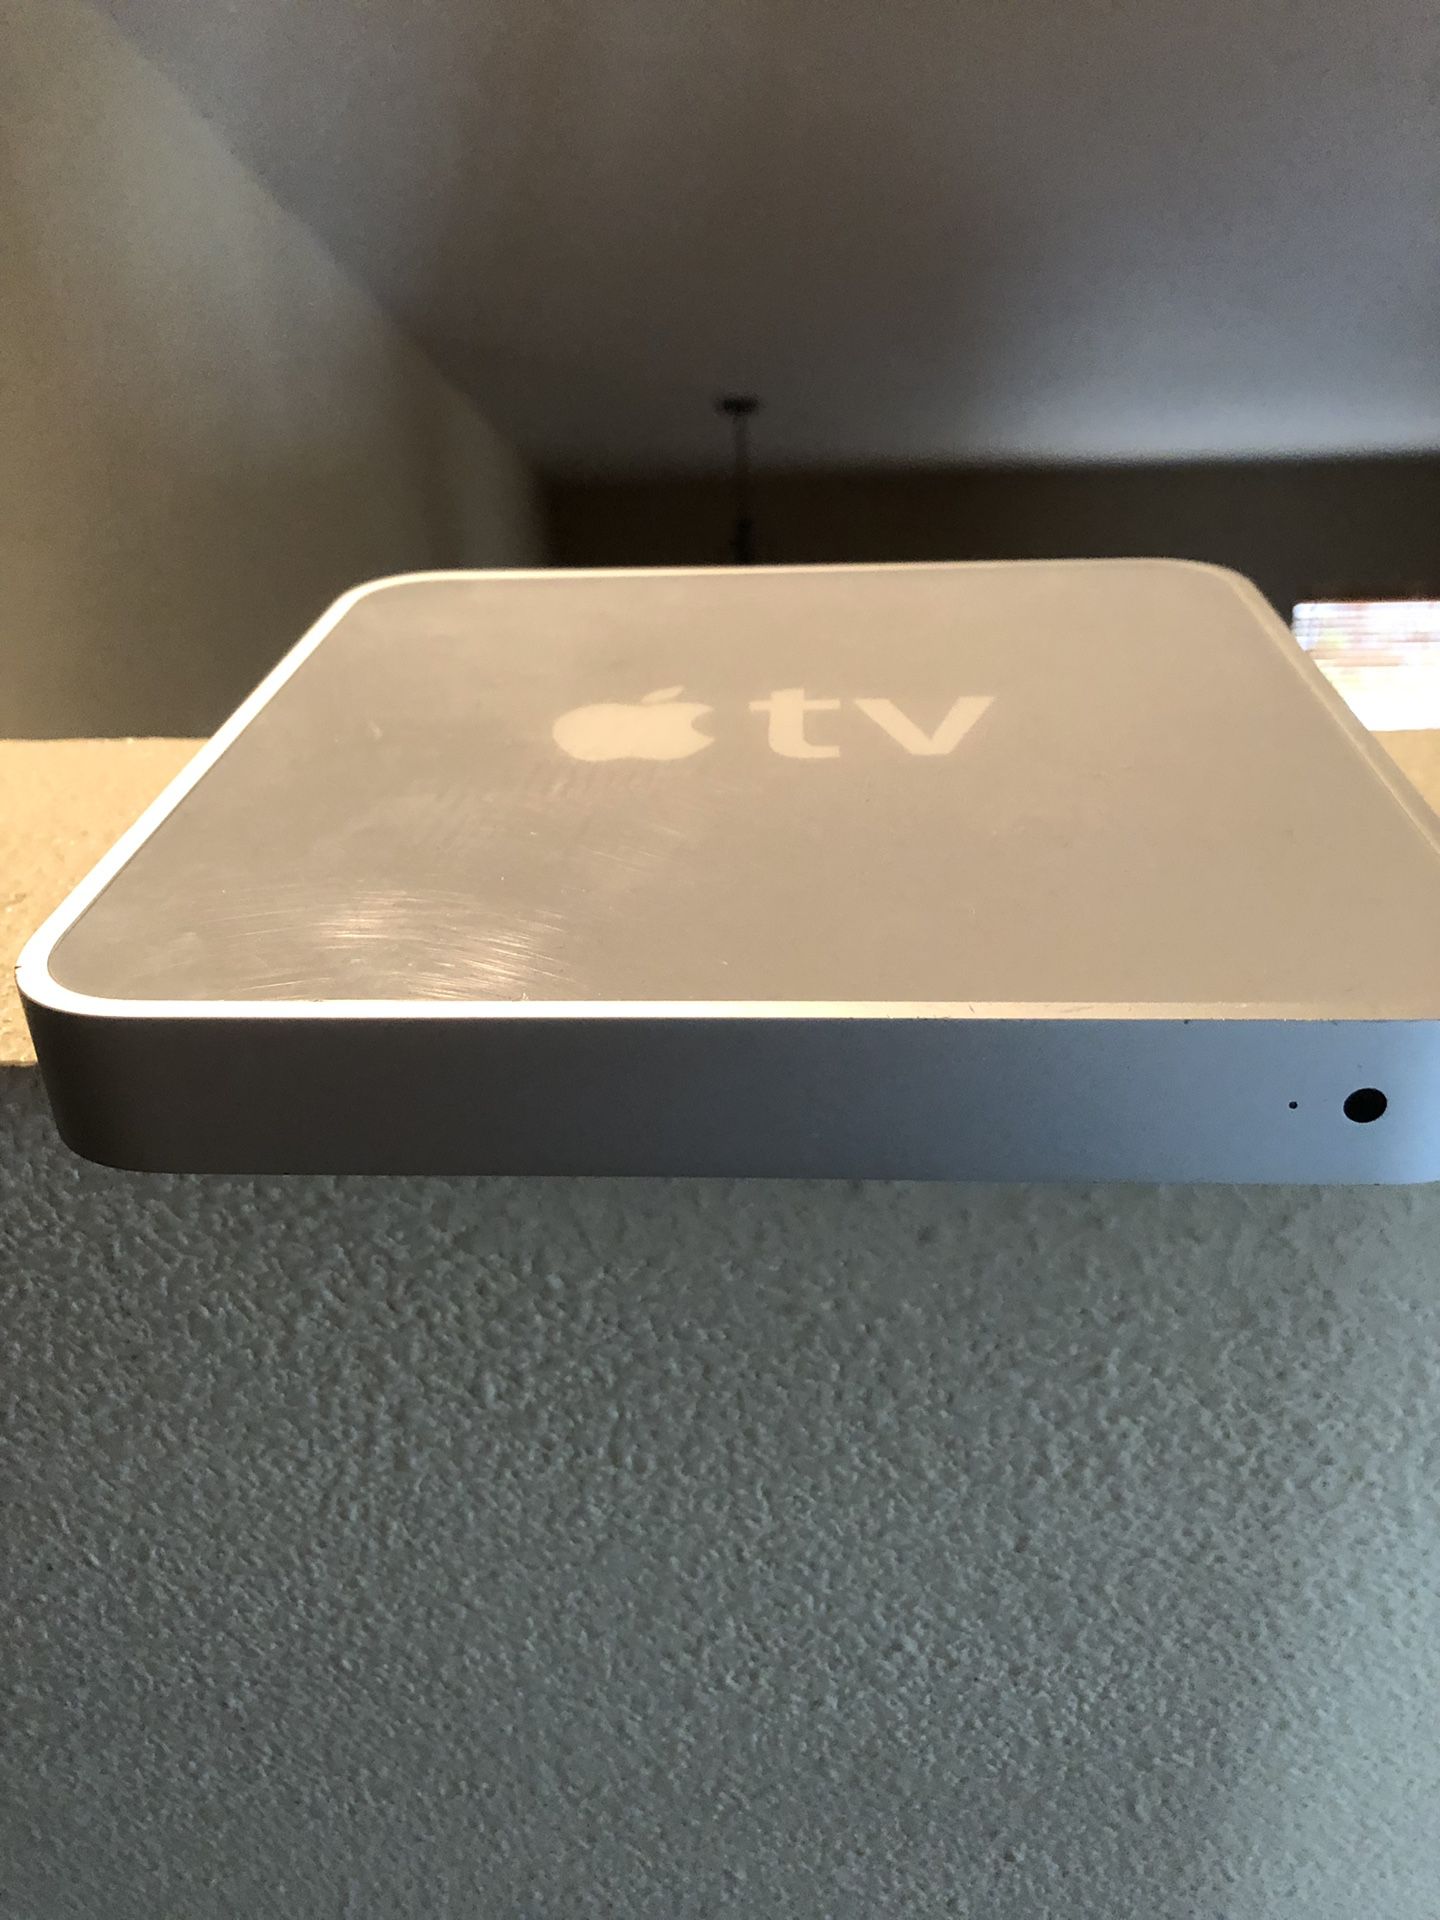 MOVING SALE - Original Apple TV works, no cables or remote